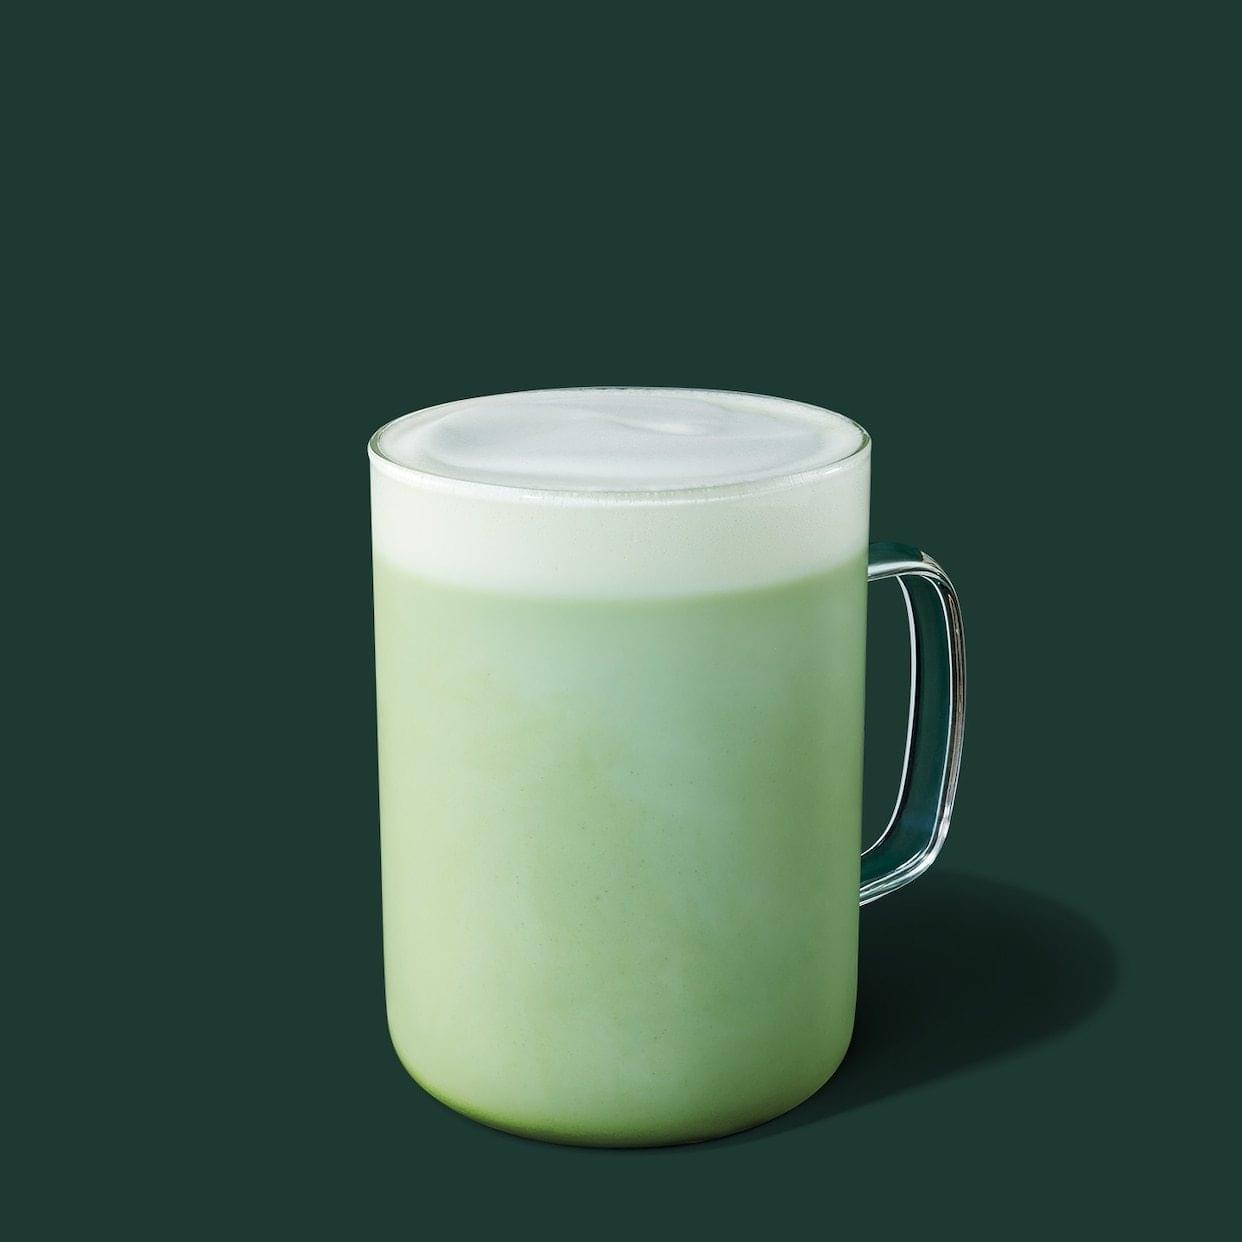 Starbucks Short Matcha Green Tea Latte Nutrition Facts